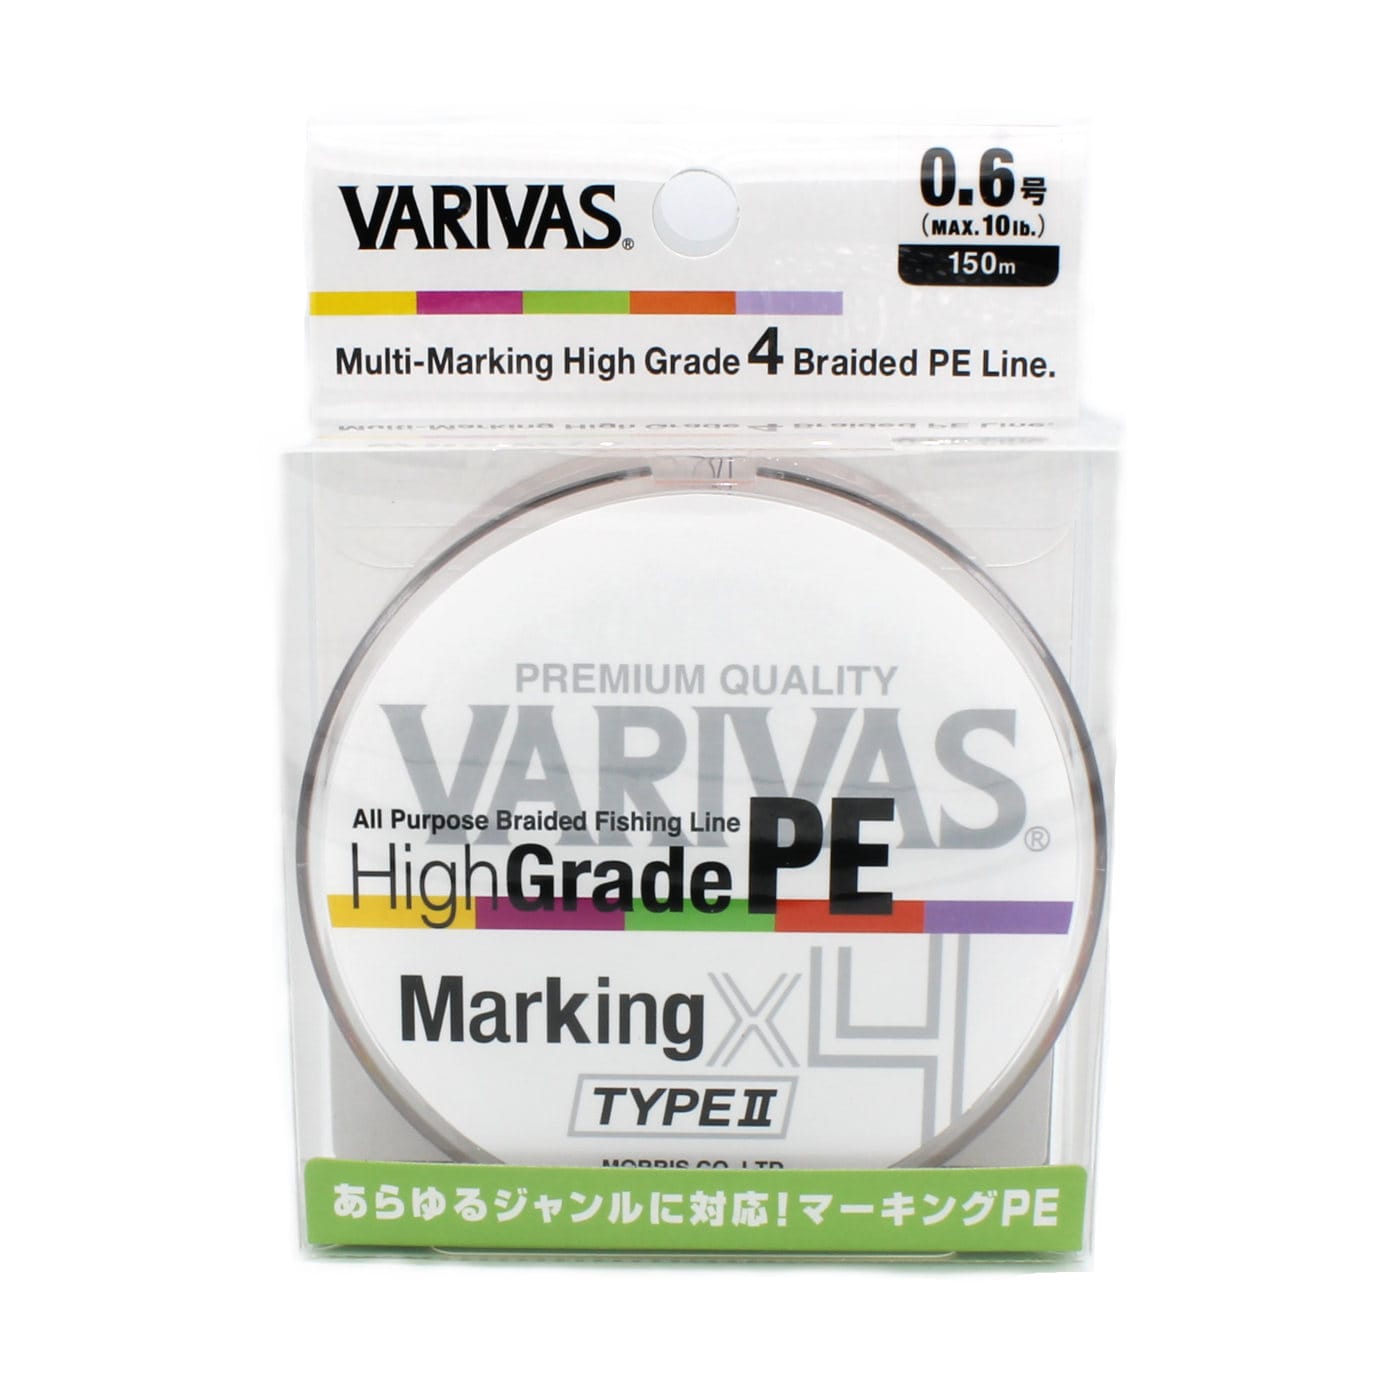 Varivas High Grade PE Marking Type II X4 Braided Line